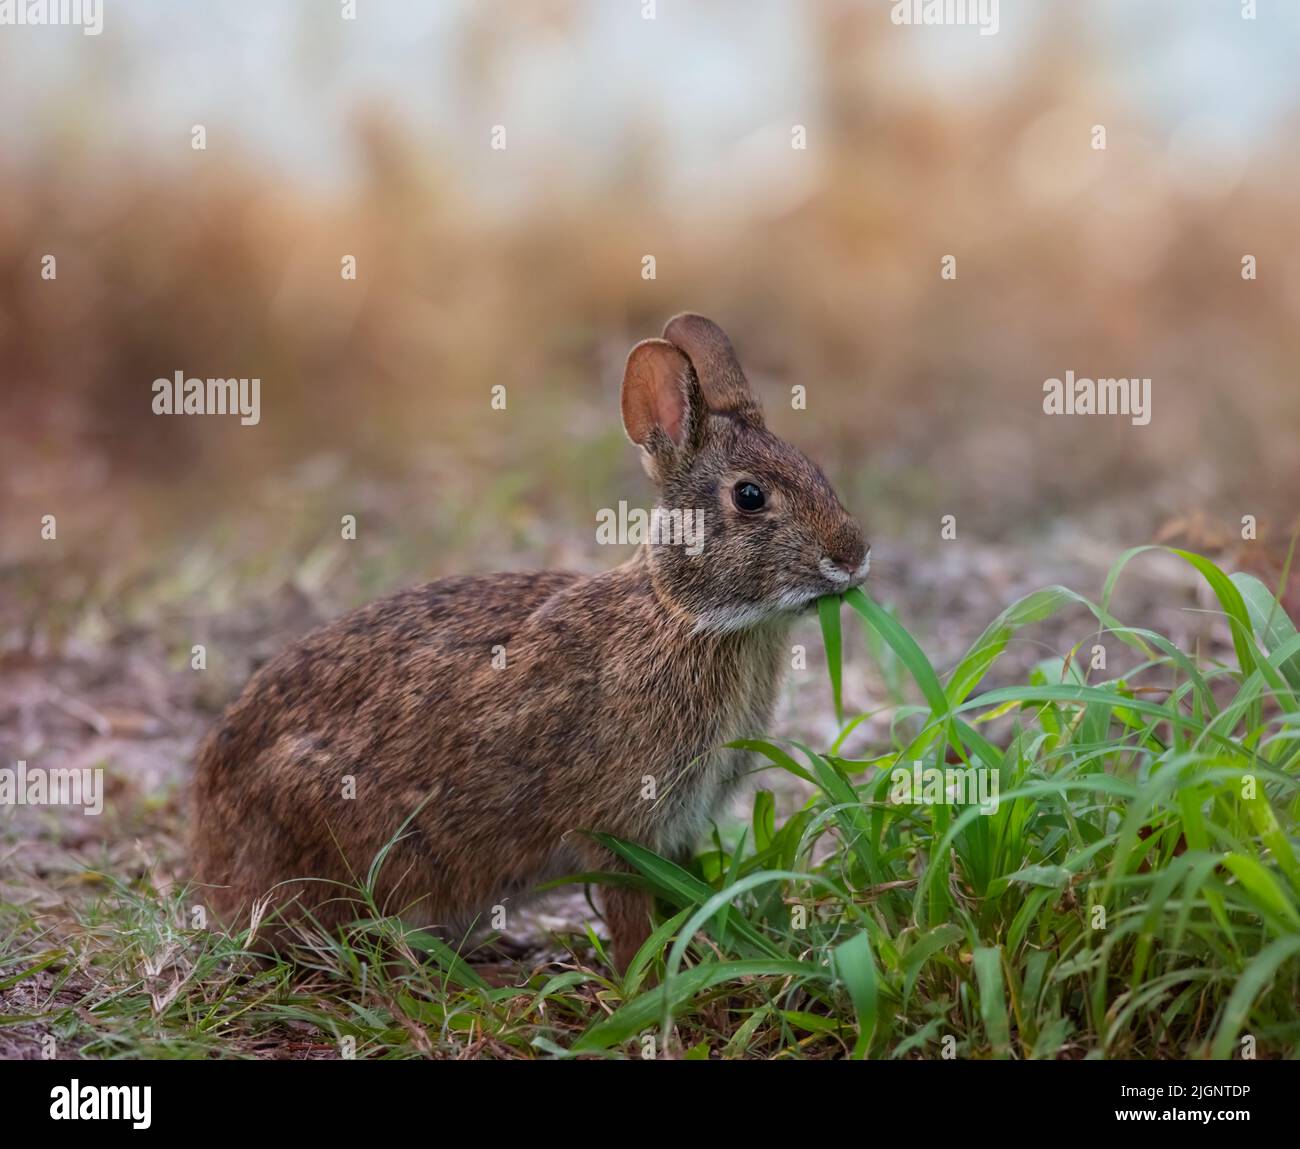 Marsh Rabbit feeds on Grass in Florida wetlands Stock Photo